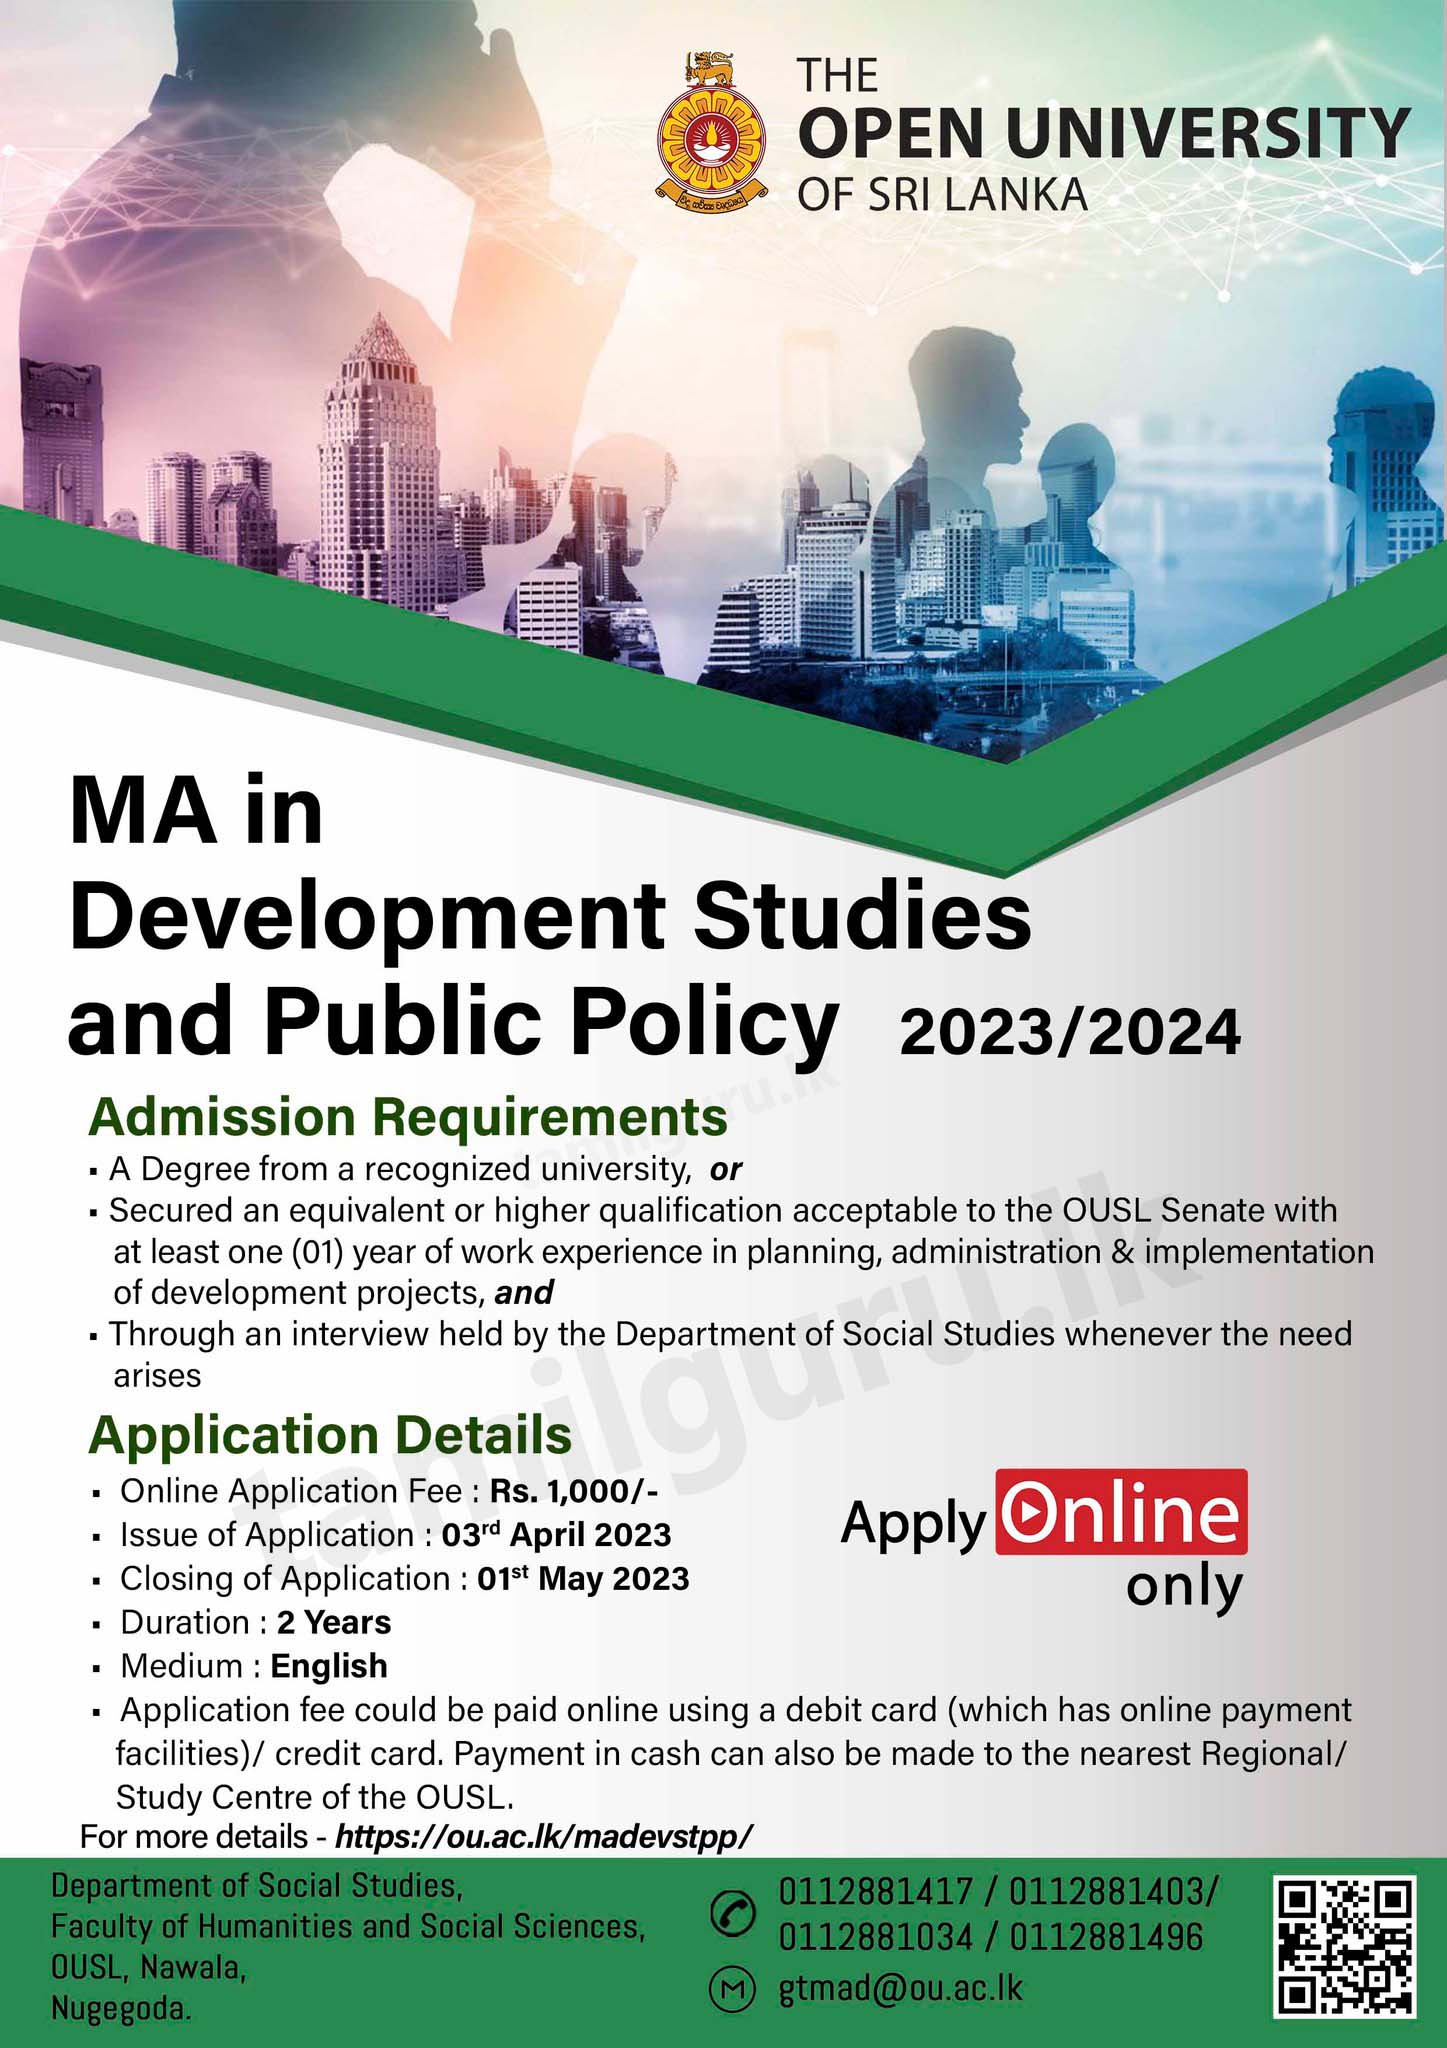 MA in Development Studies and Public Policy Degree Programme 2023 - Open University of Sri Lanka